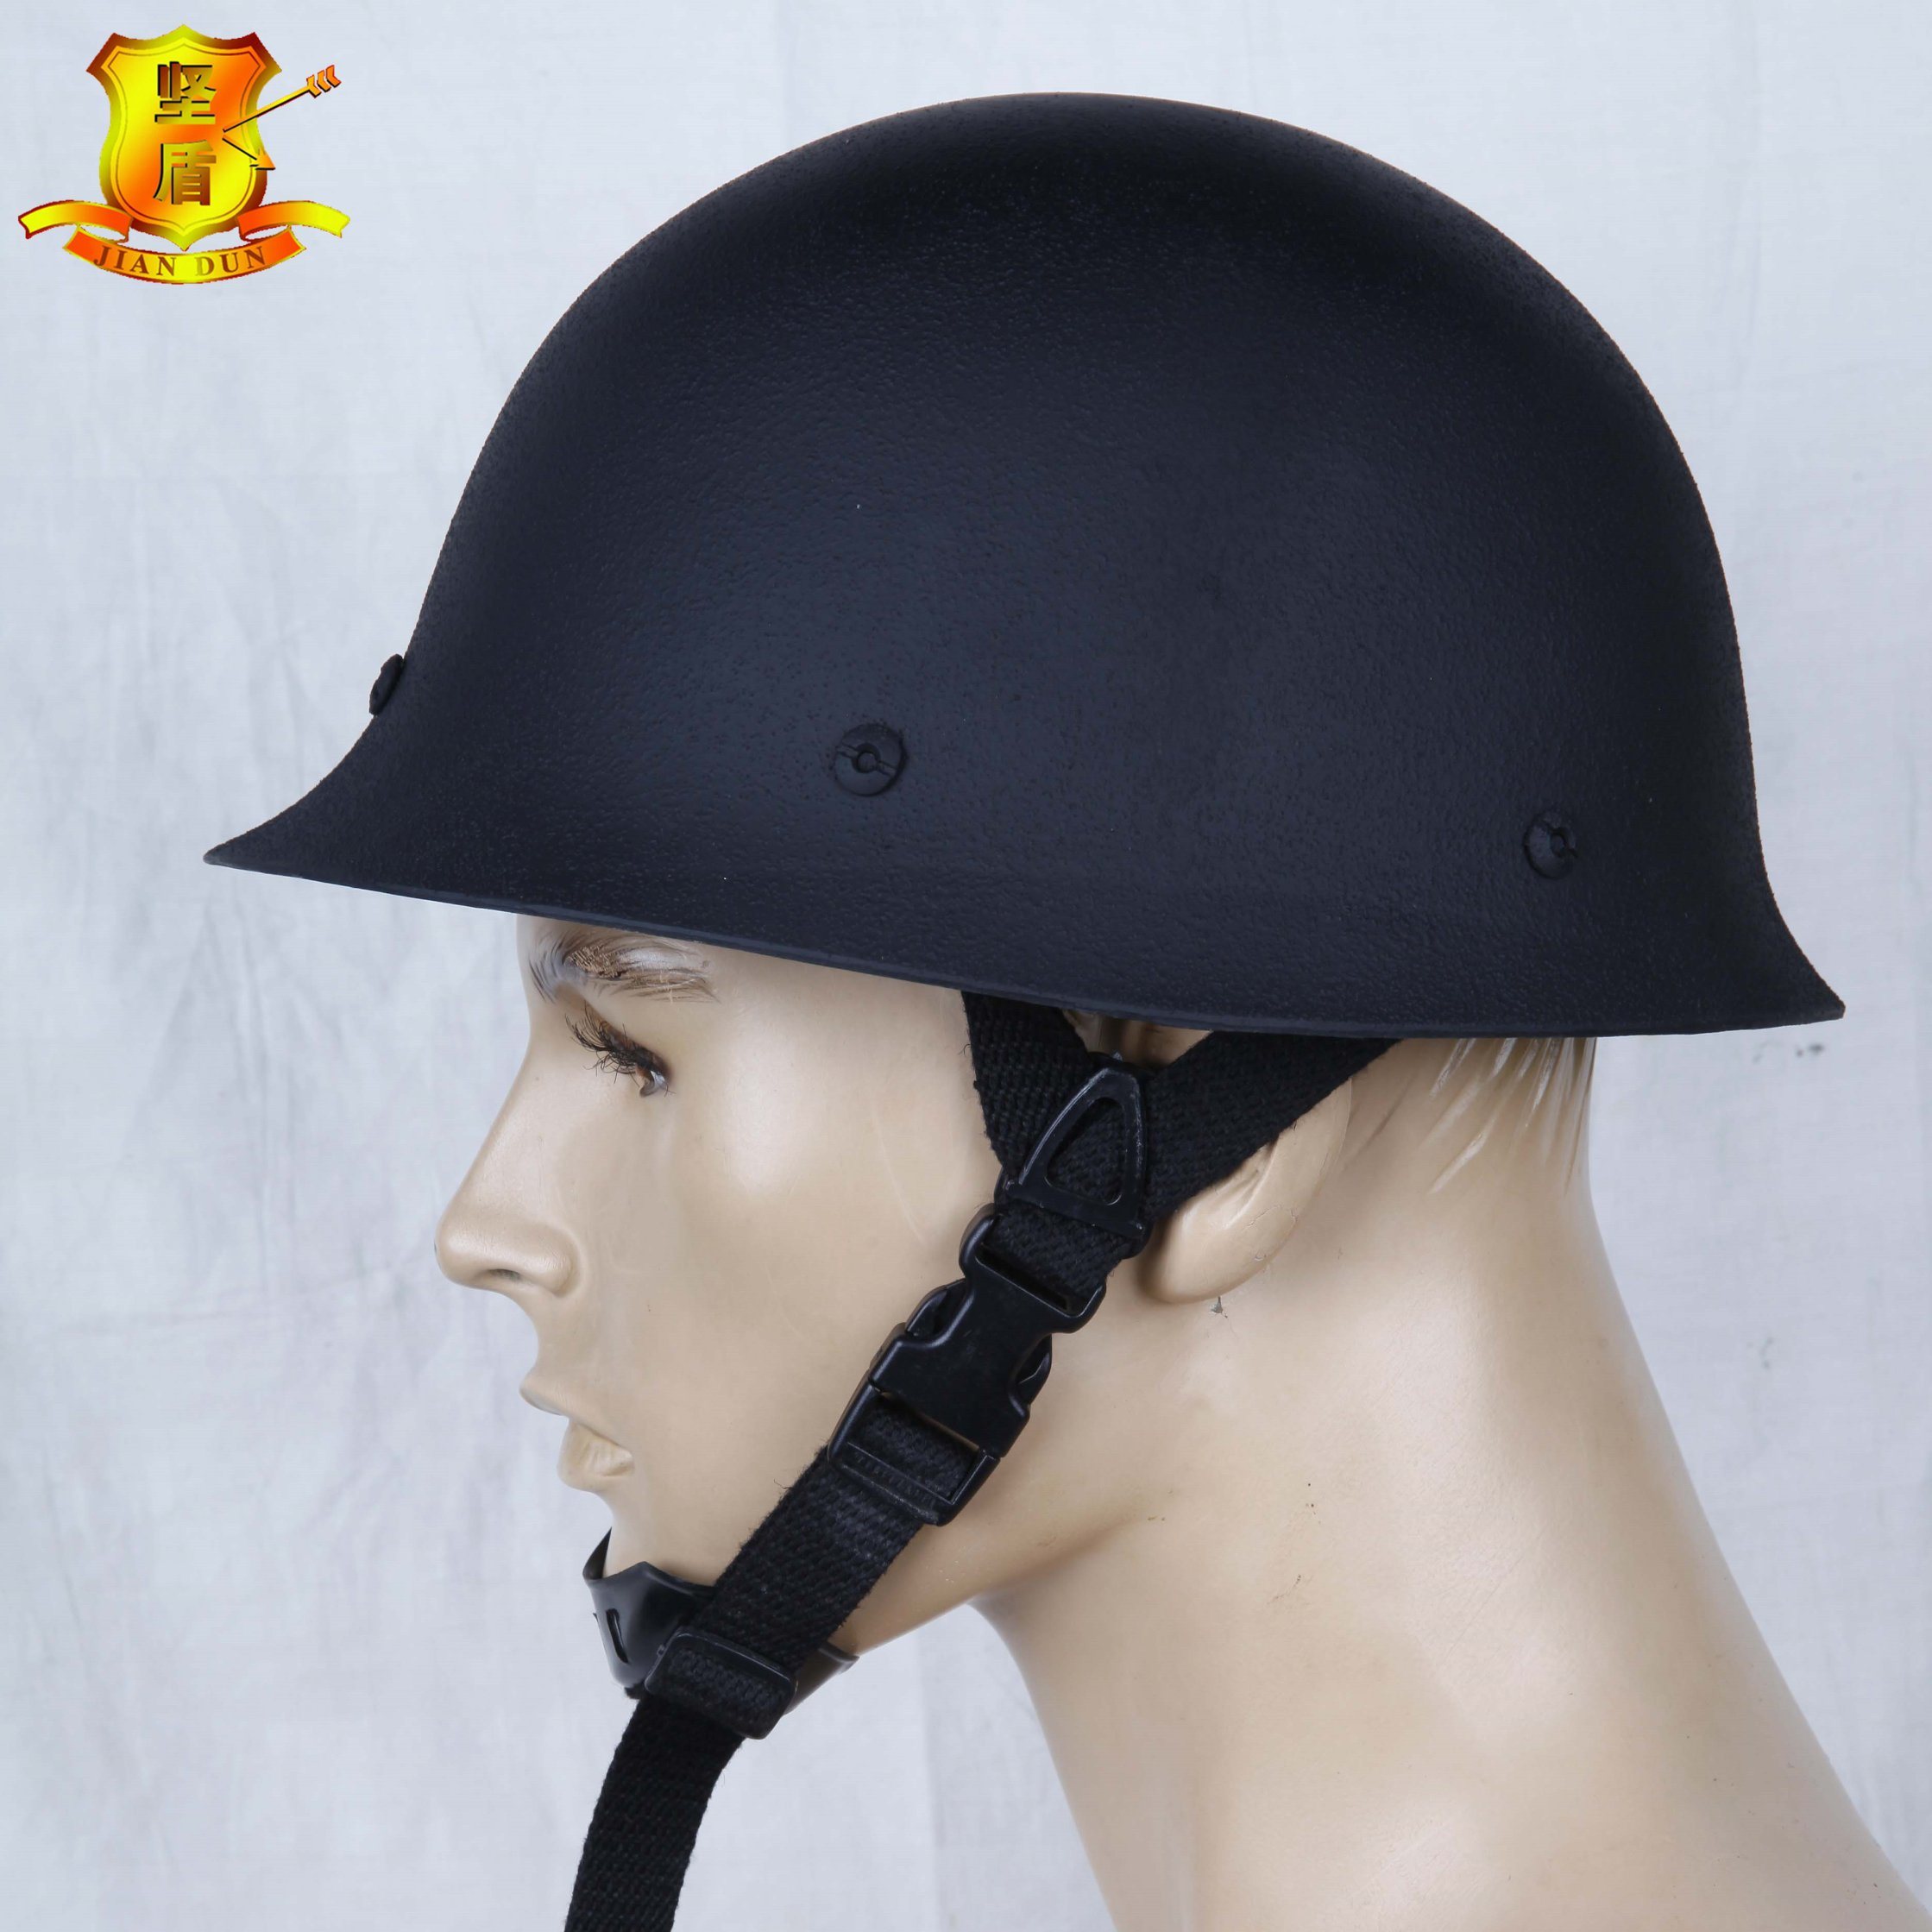 Us Replica M1 Wwii Infantry Army Helmet with Liner & Helmet Net-Green